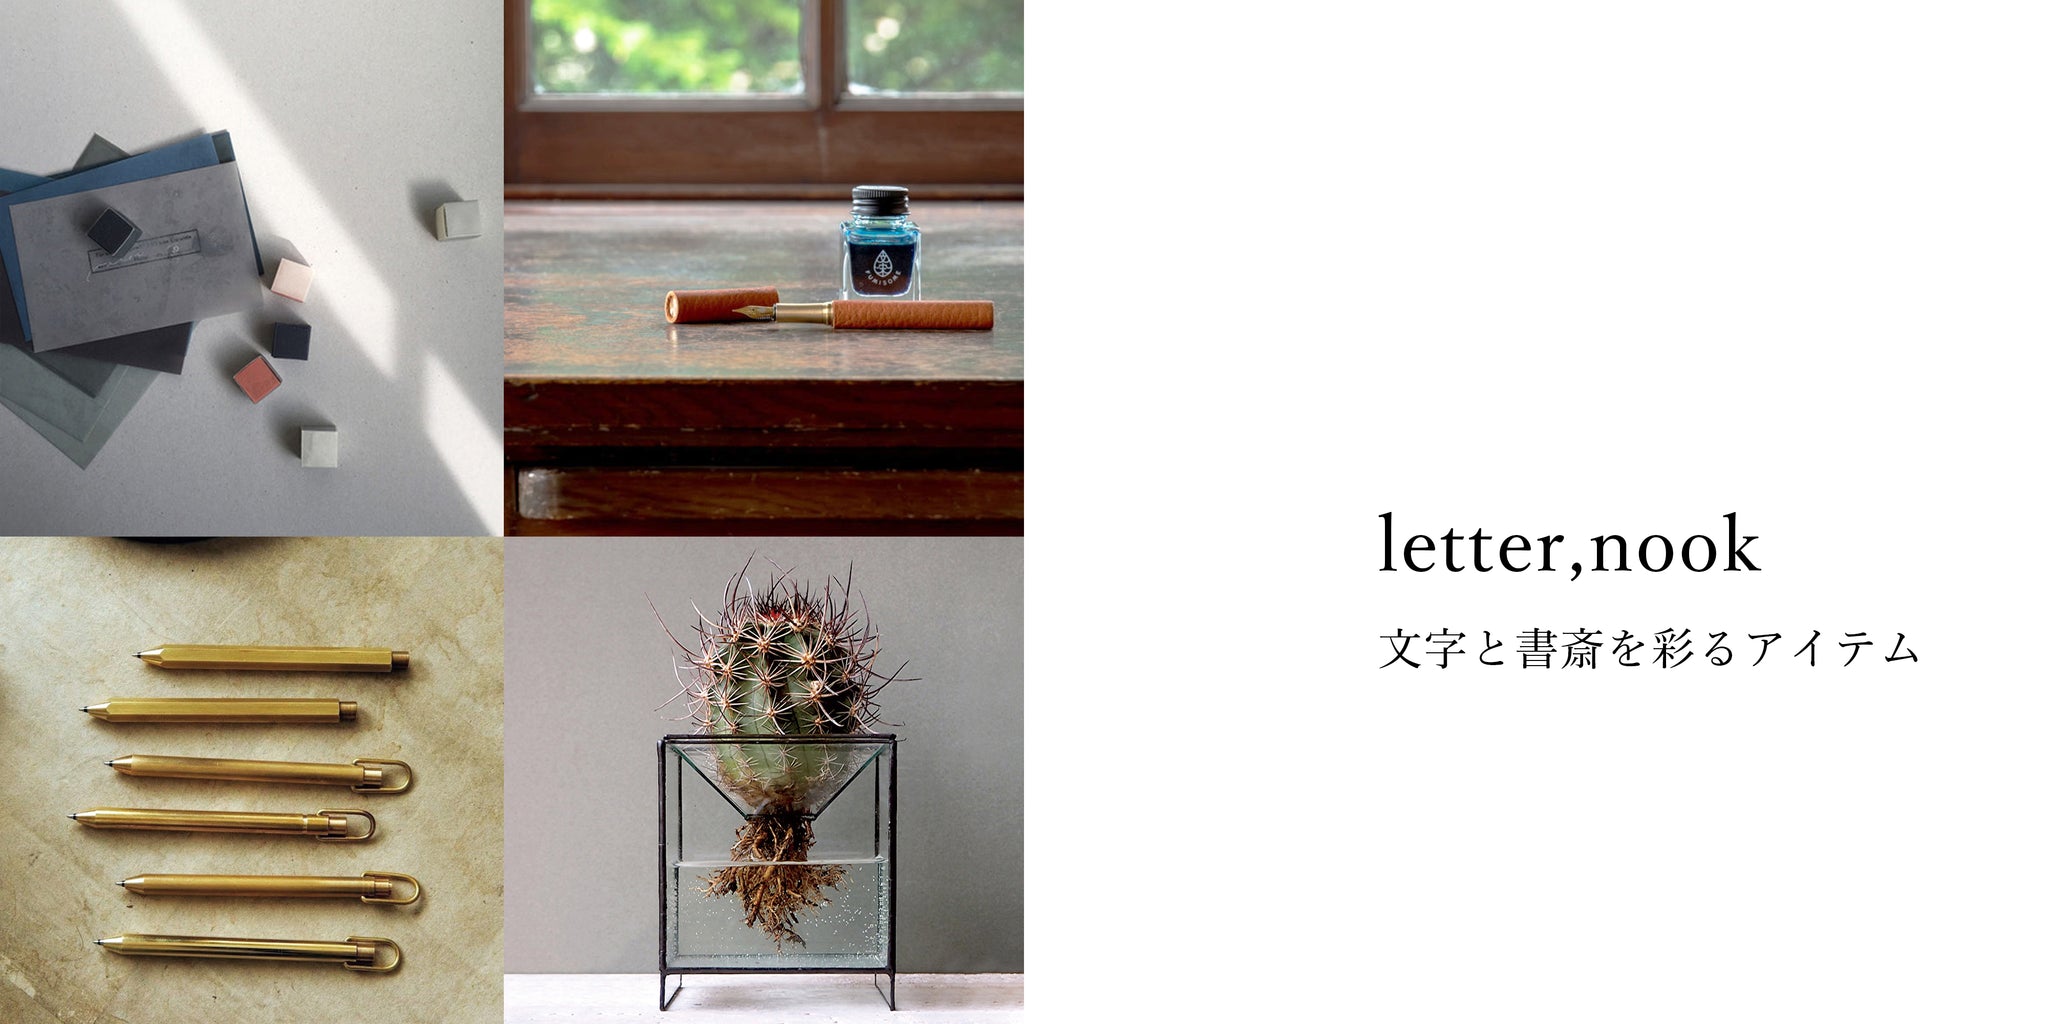 letter , nook　～文字と書斎を彩るアイテム～